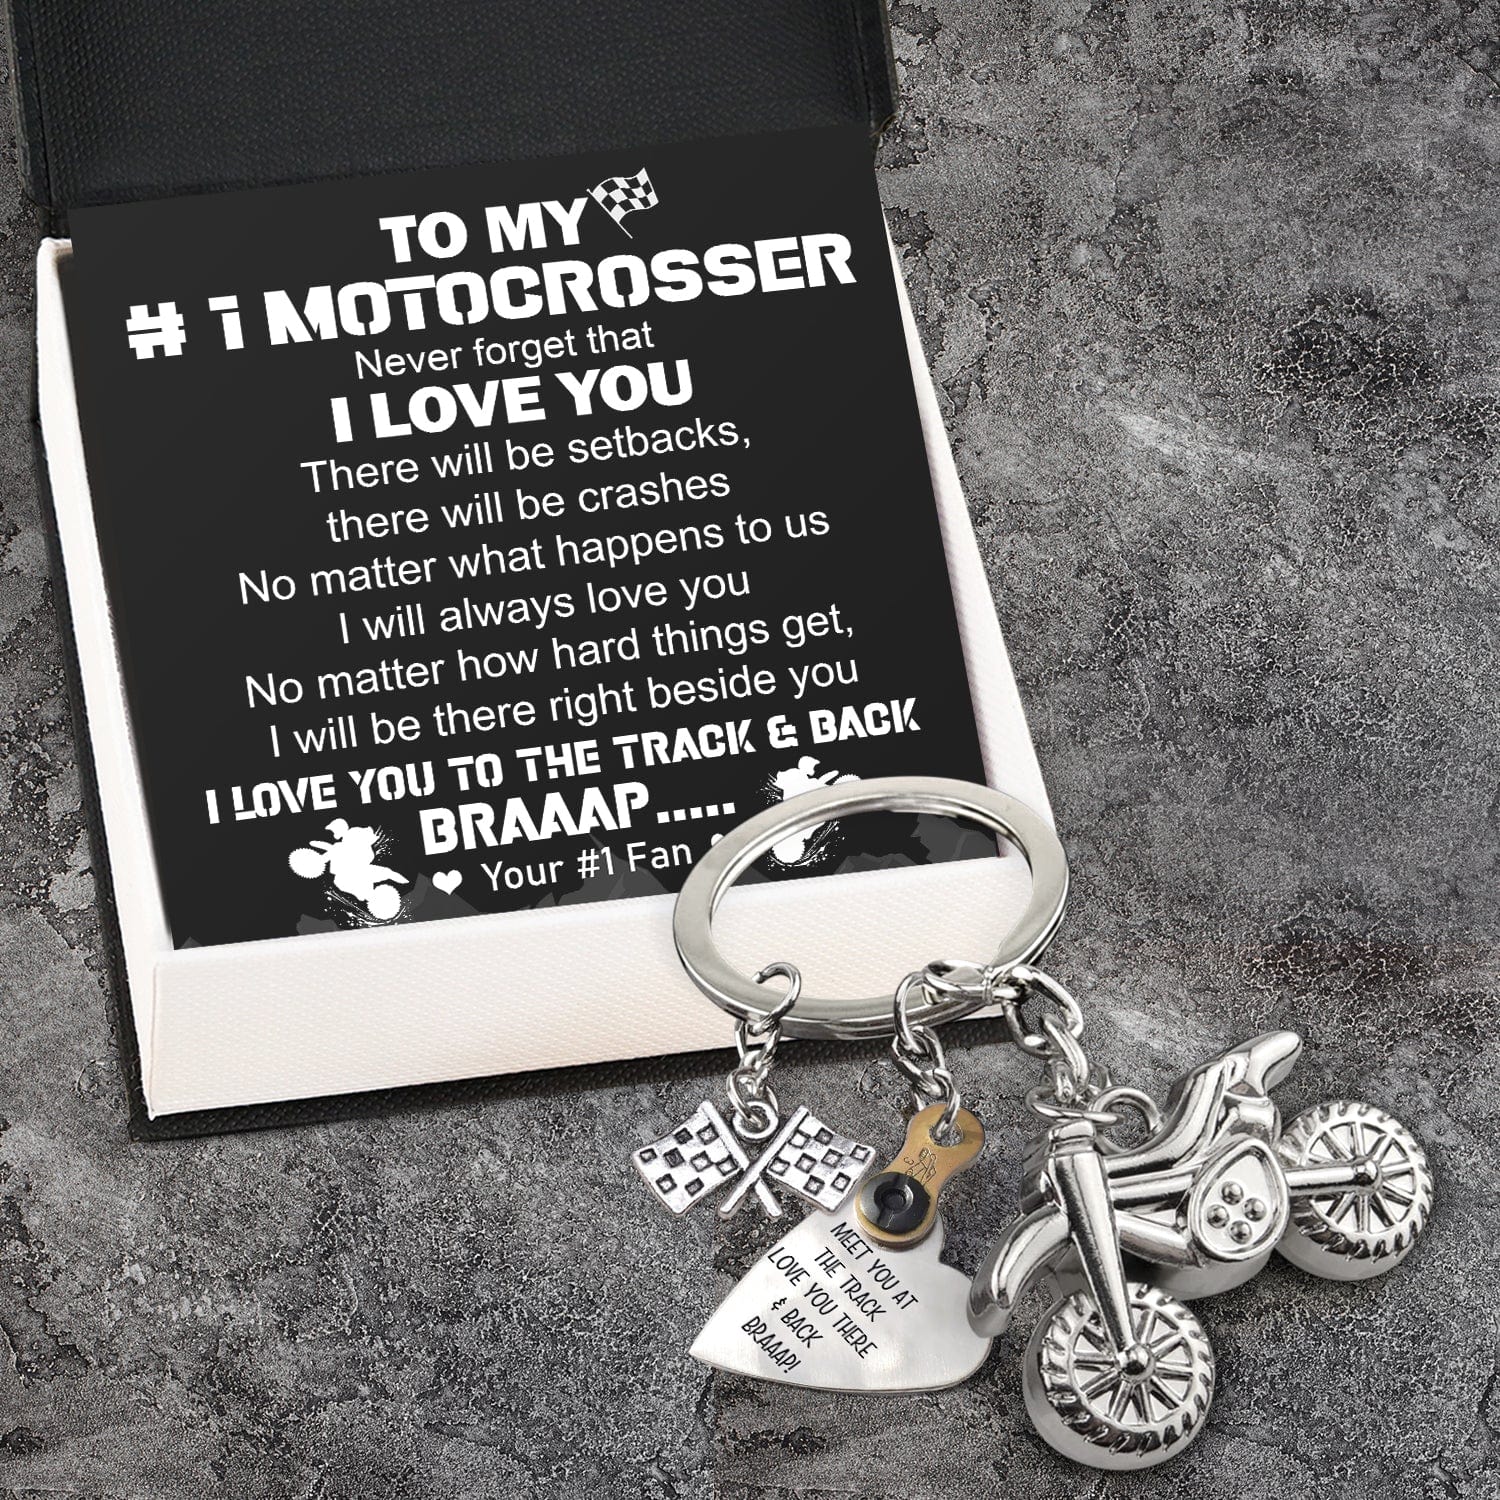 Dirt Bike Rider & Motocross Rider - Biker - To My #1 Motocrosser - Never Forget That I Love You - Gkex12001